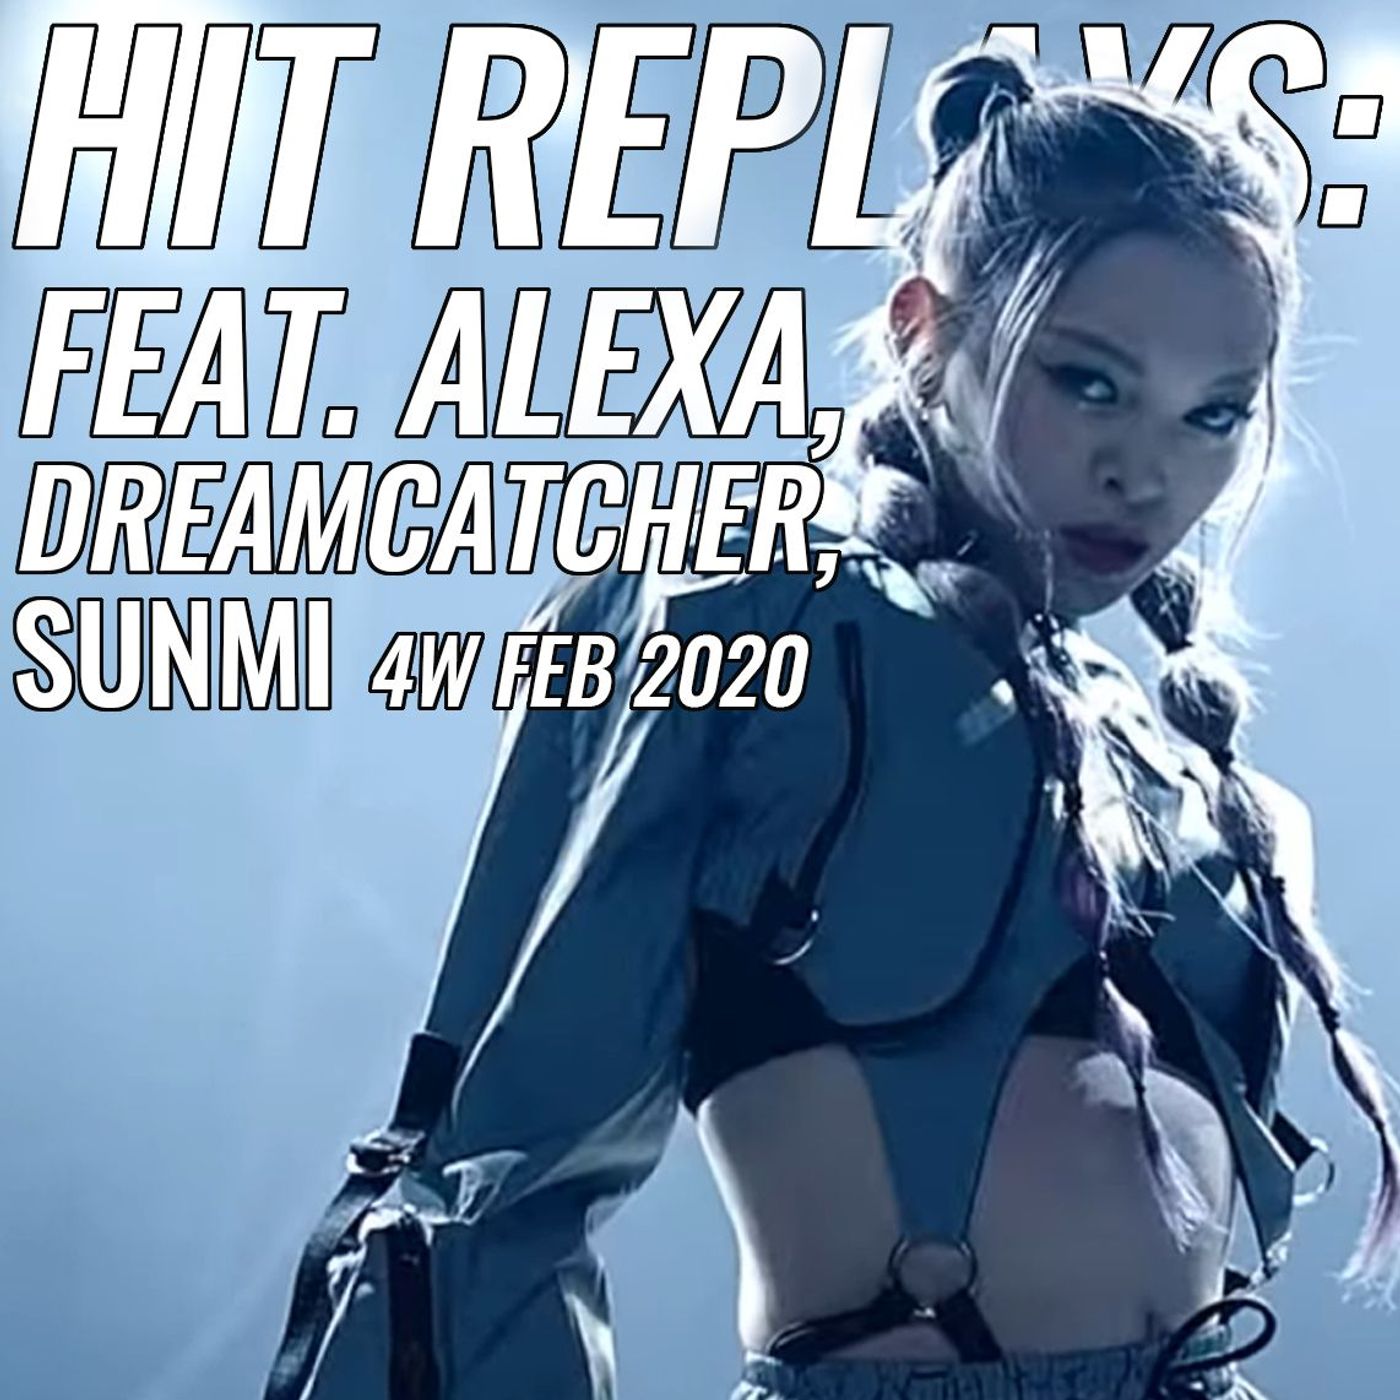 Hit Replays: AleXa, Dreamcatcher, Sunmi